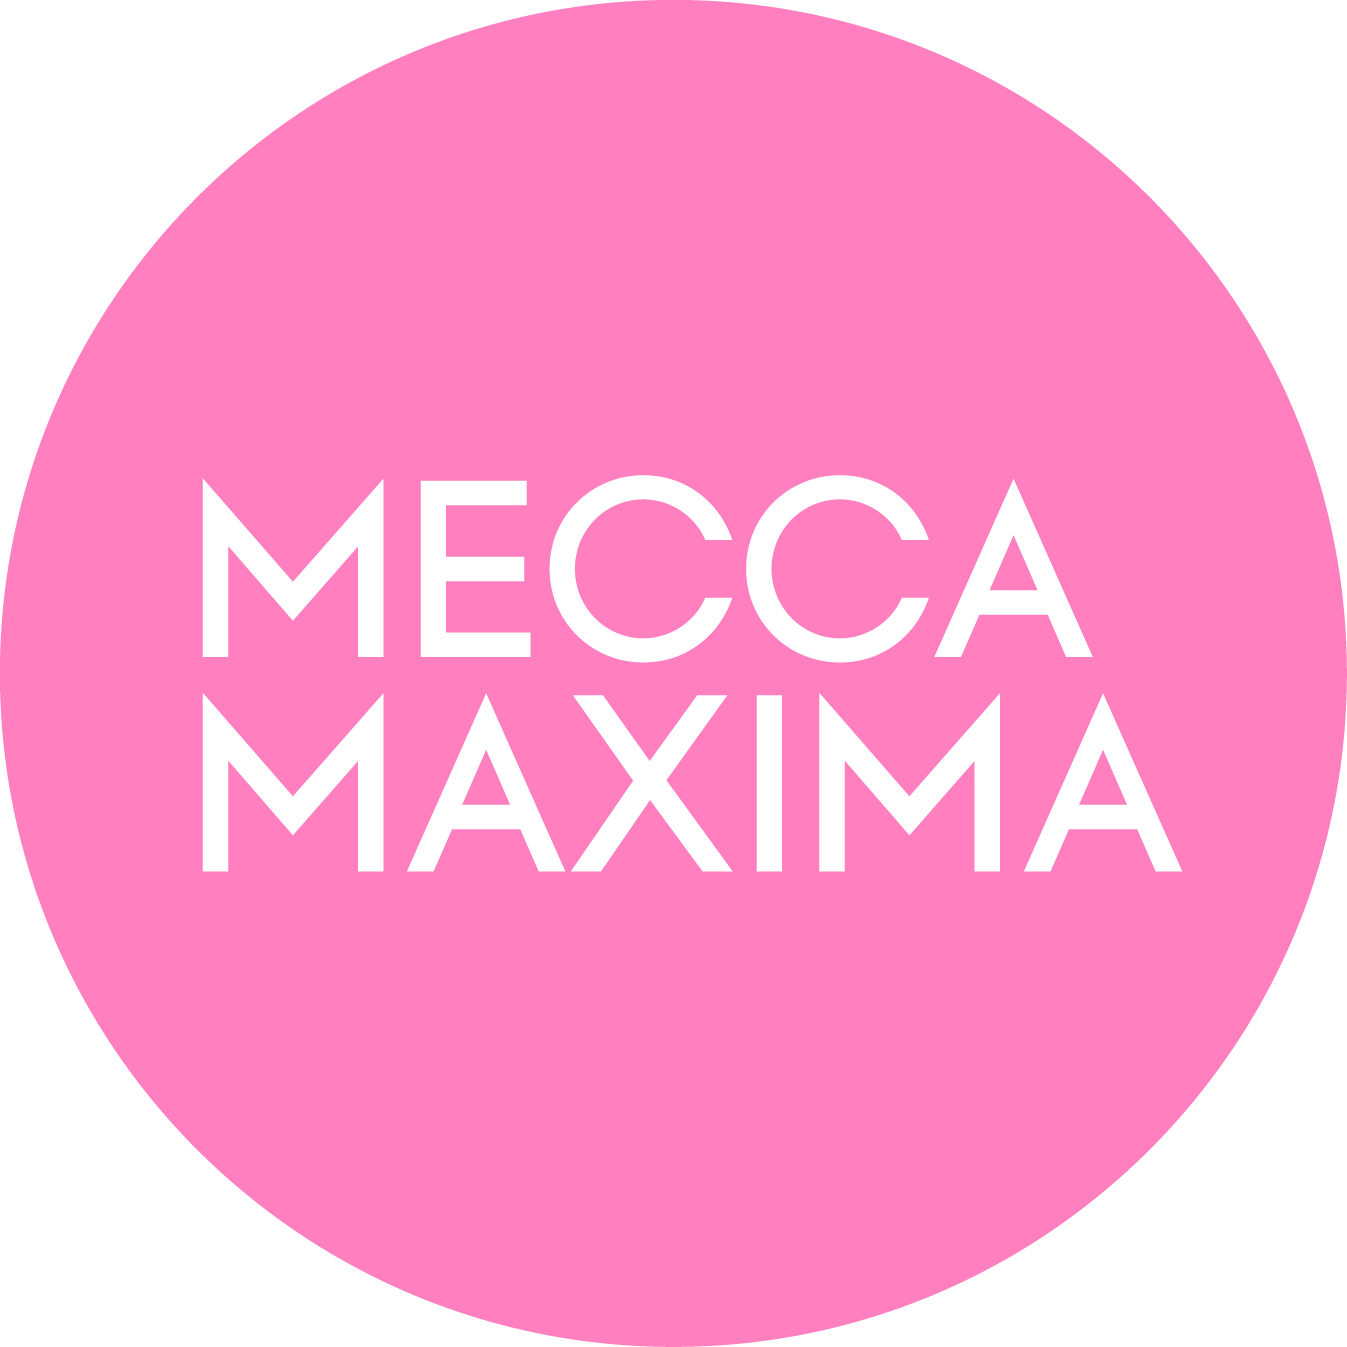 mecca-maxima-coral-circle-logo.jpg